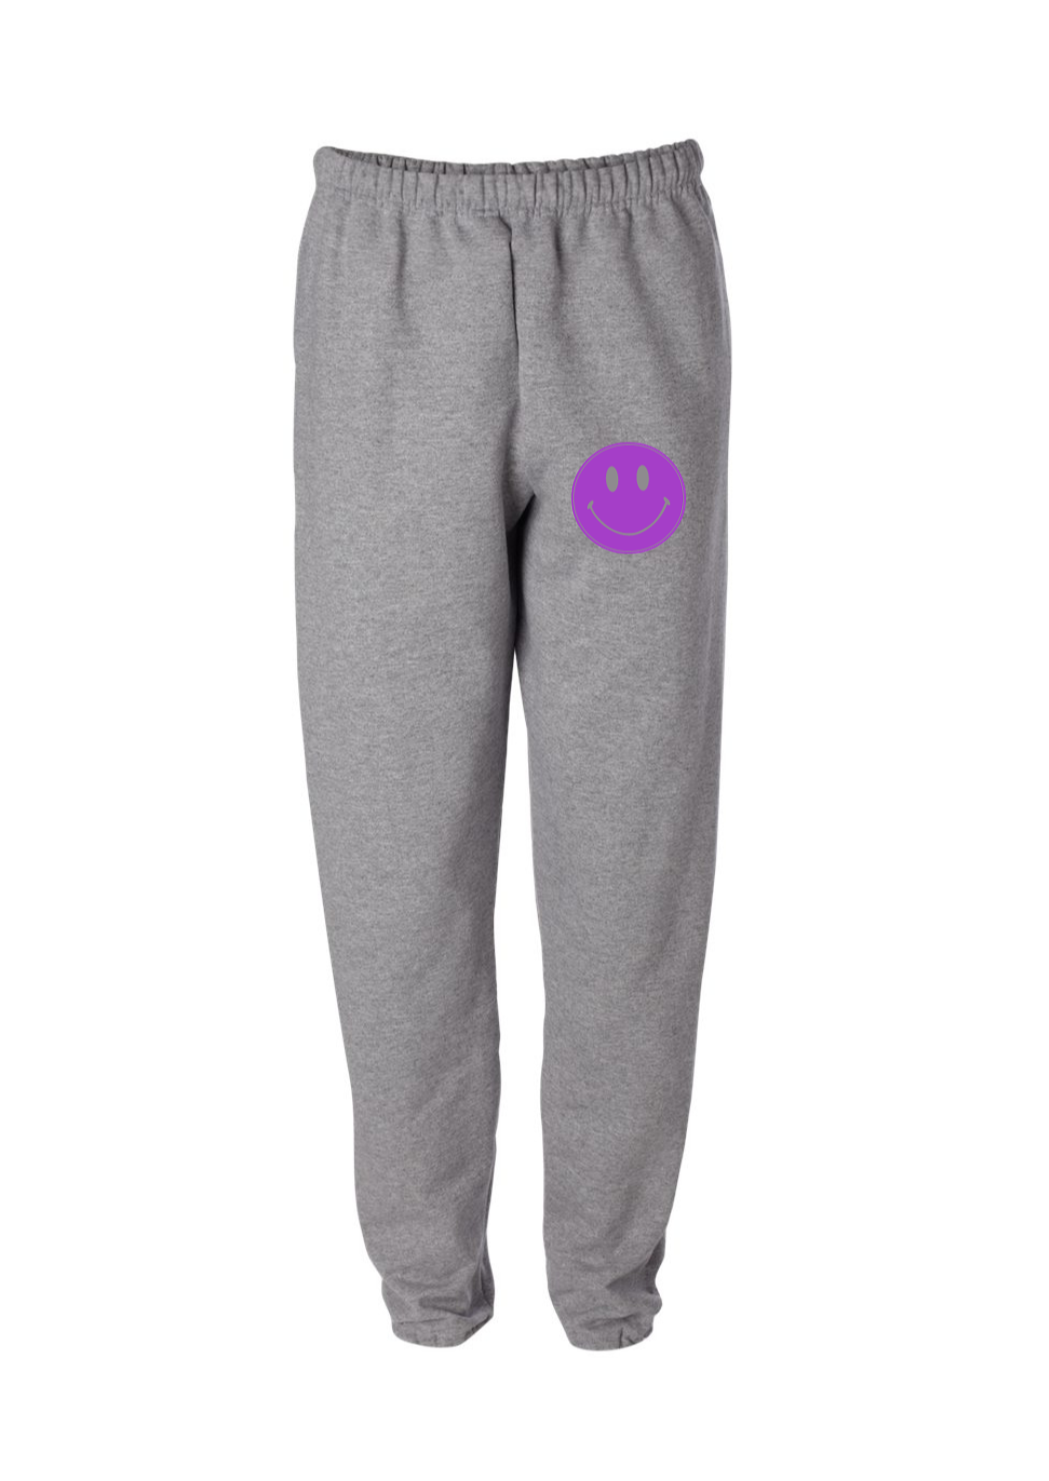 grey+purple smiley jogger style sweatpants